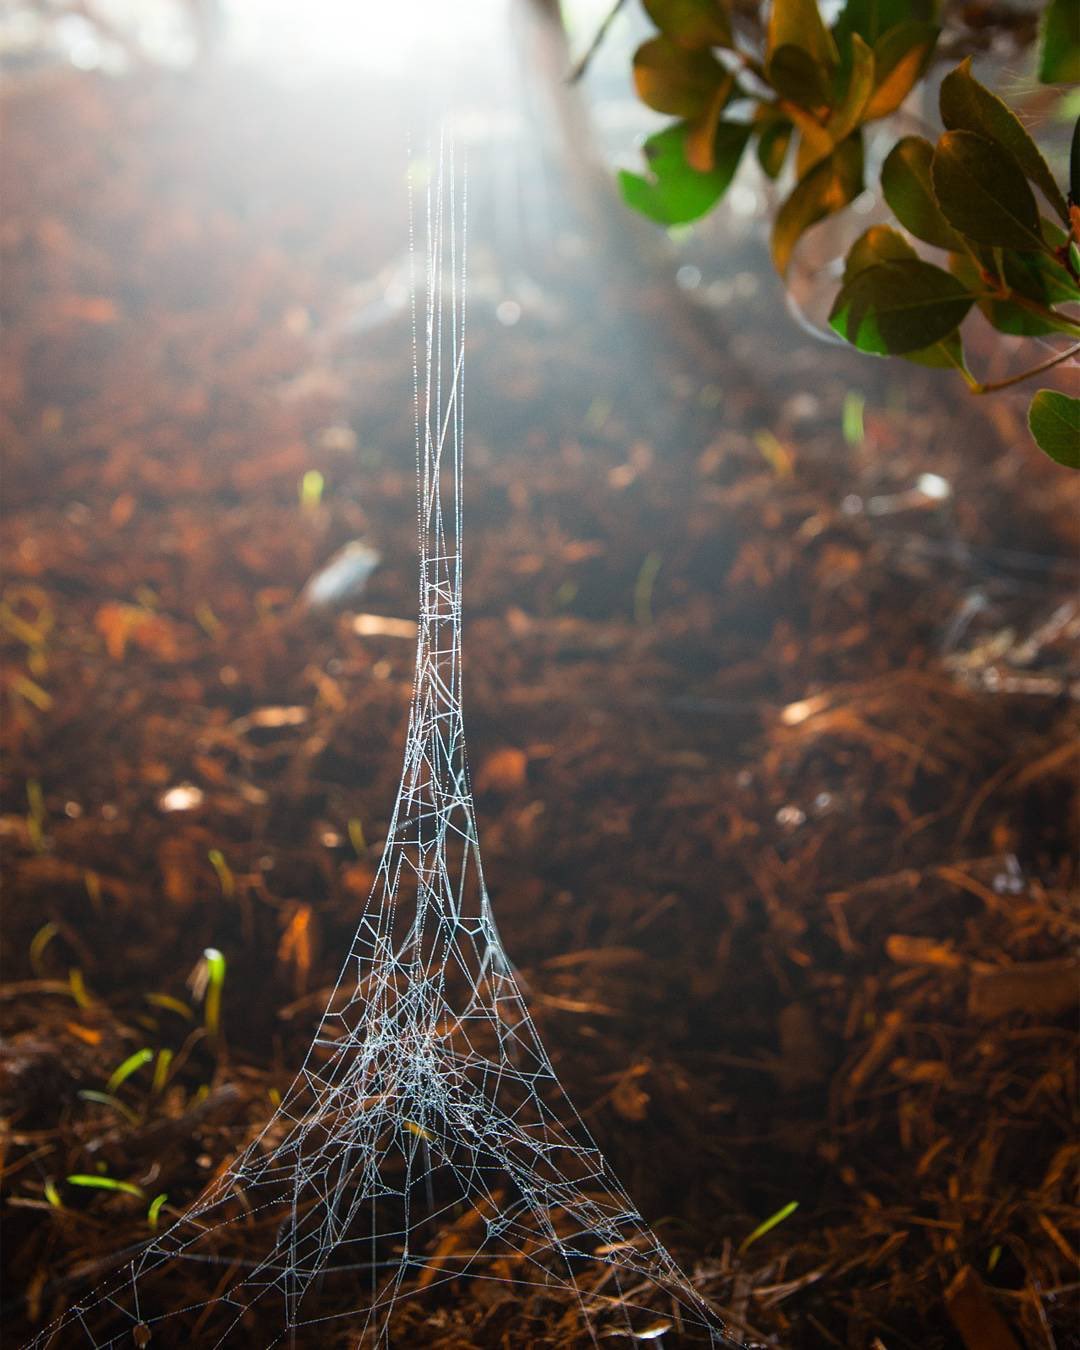 A Spider's interpretation of the Eiffel Tower.